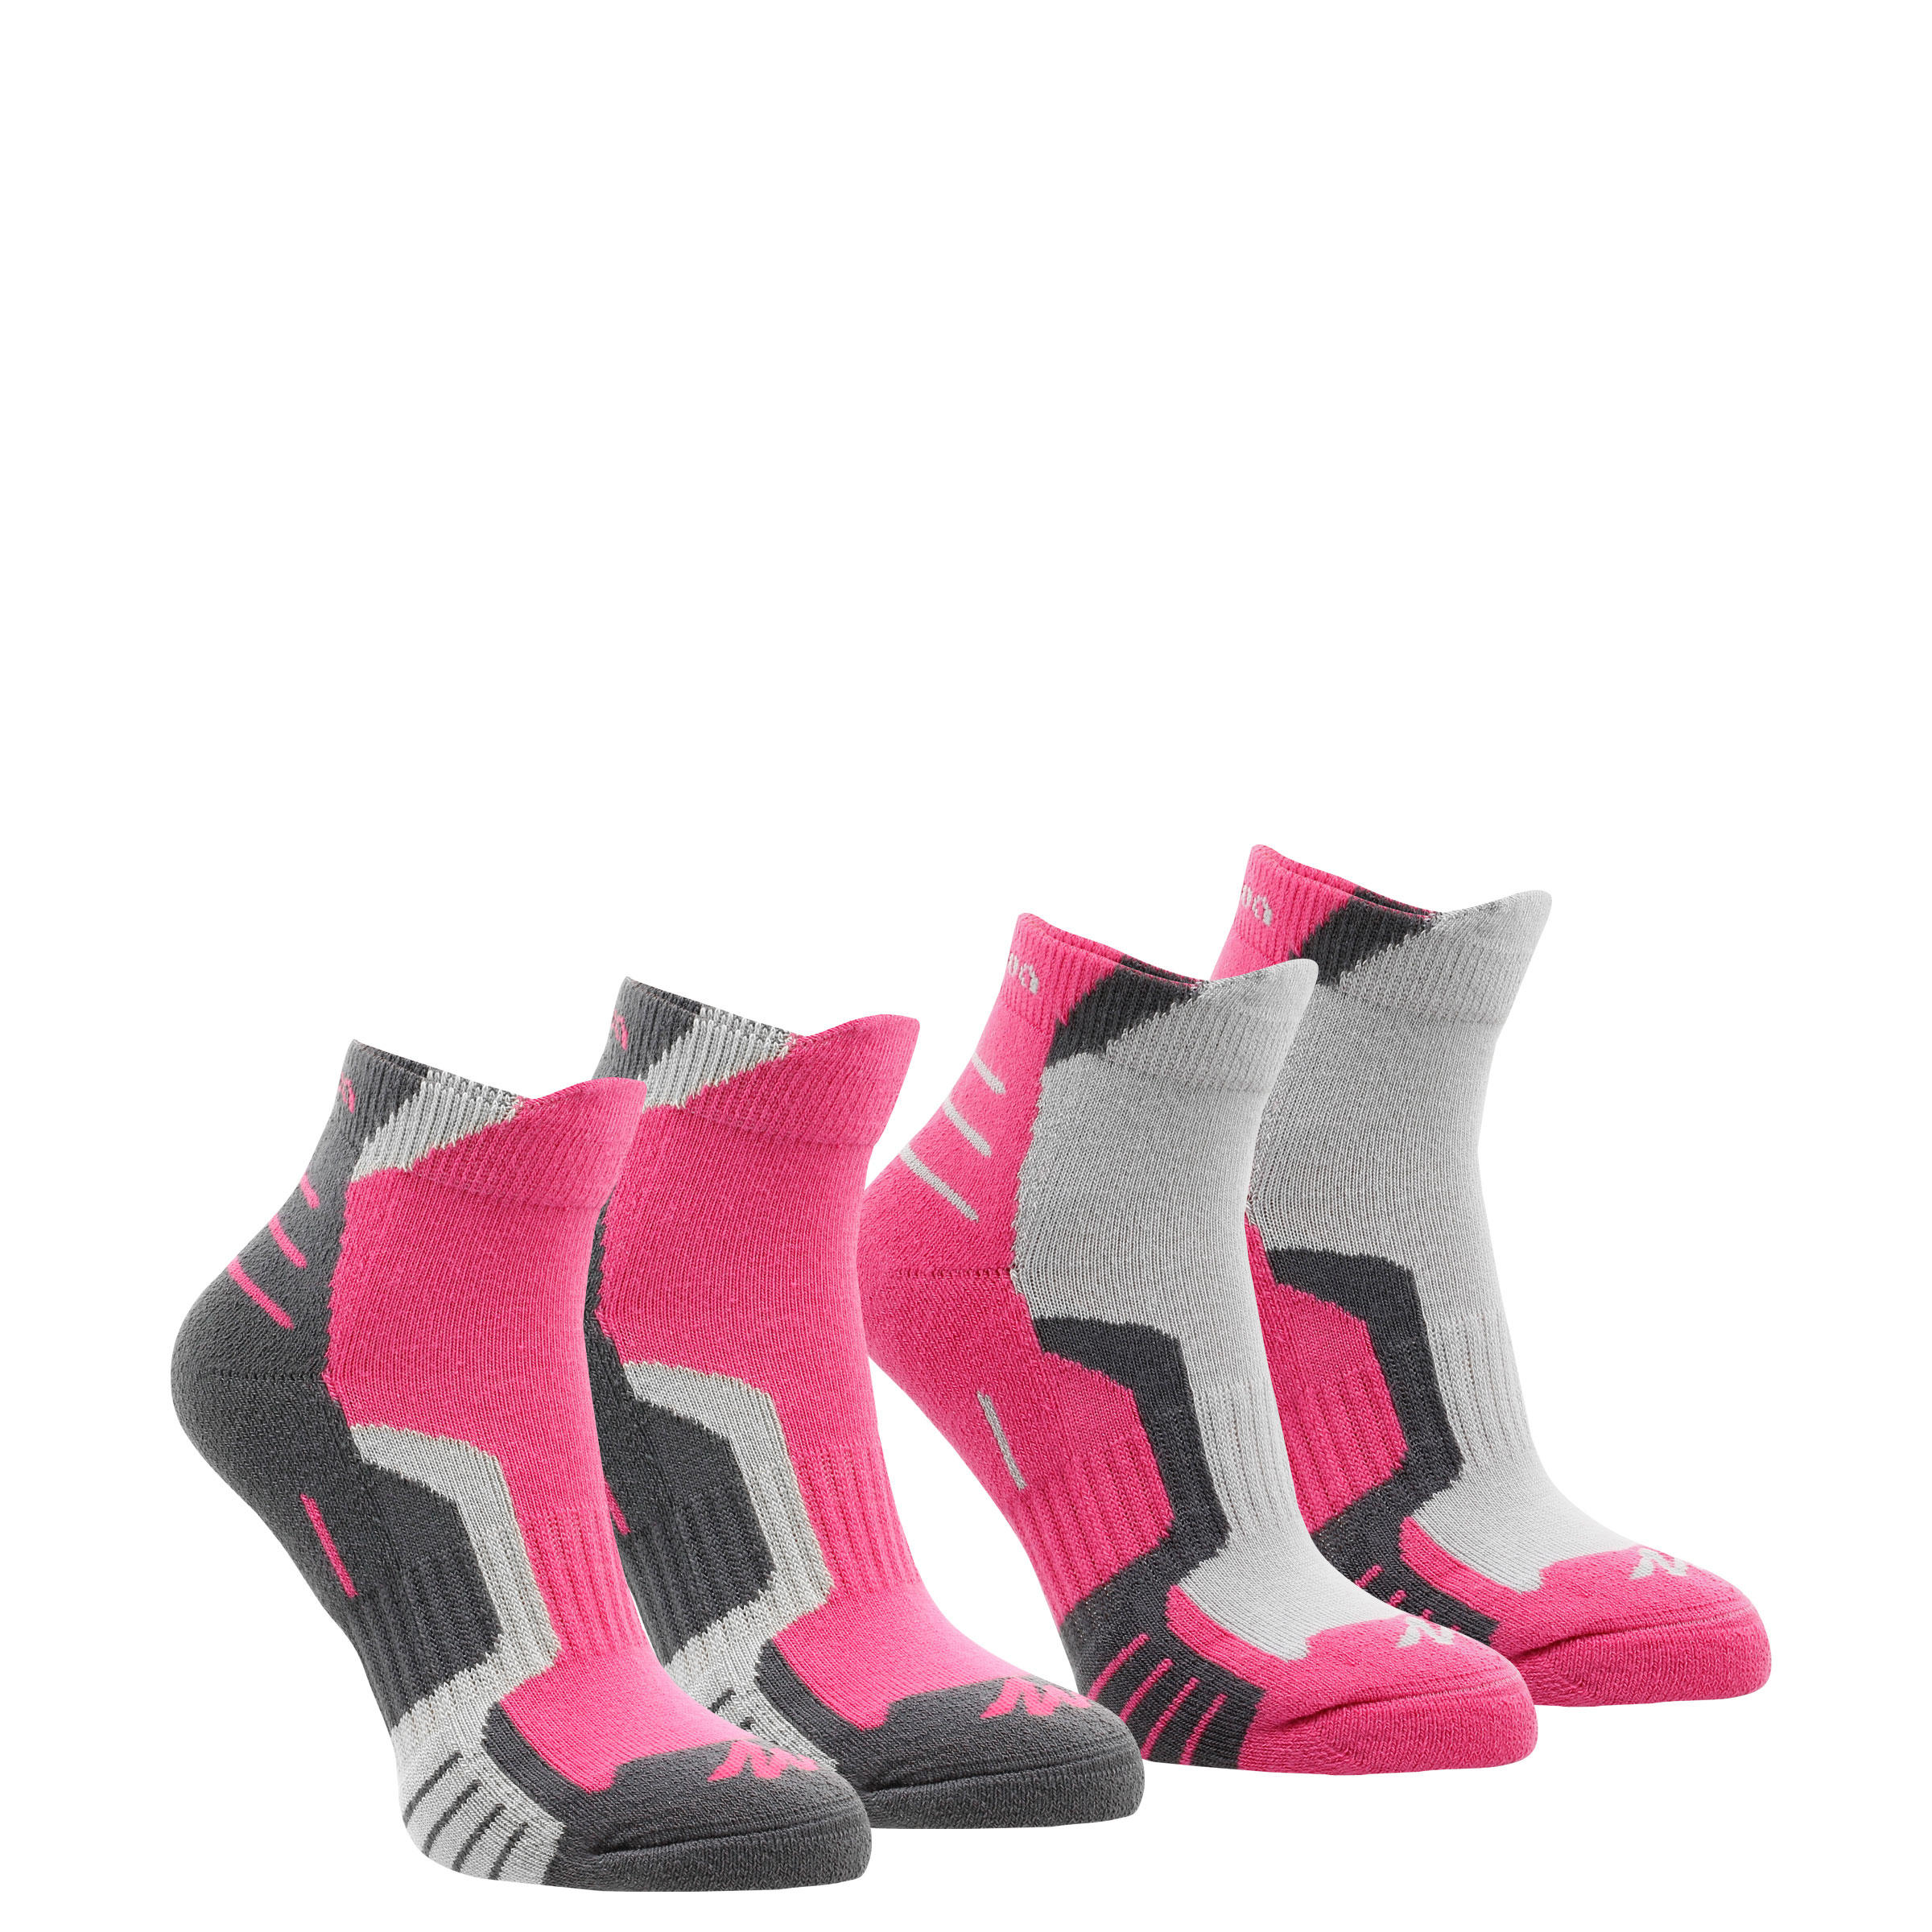 QUECHUA Children's mountain walking socks, 2 pairs, mid height crossocks - Beige